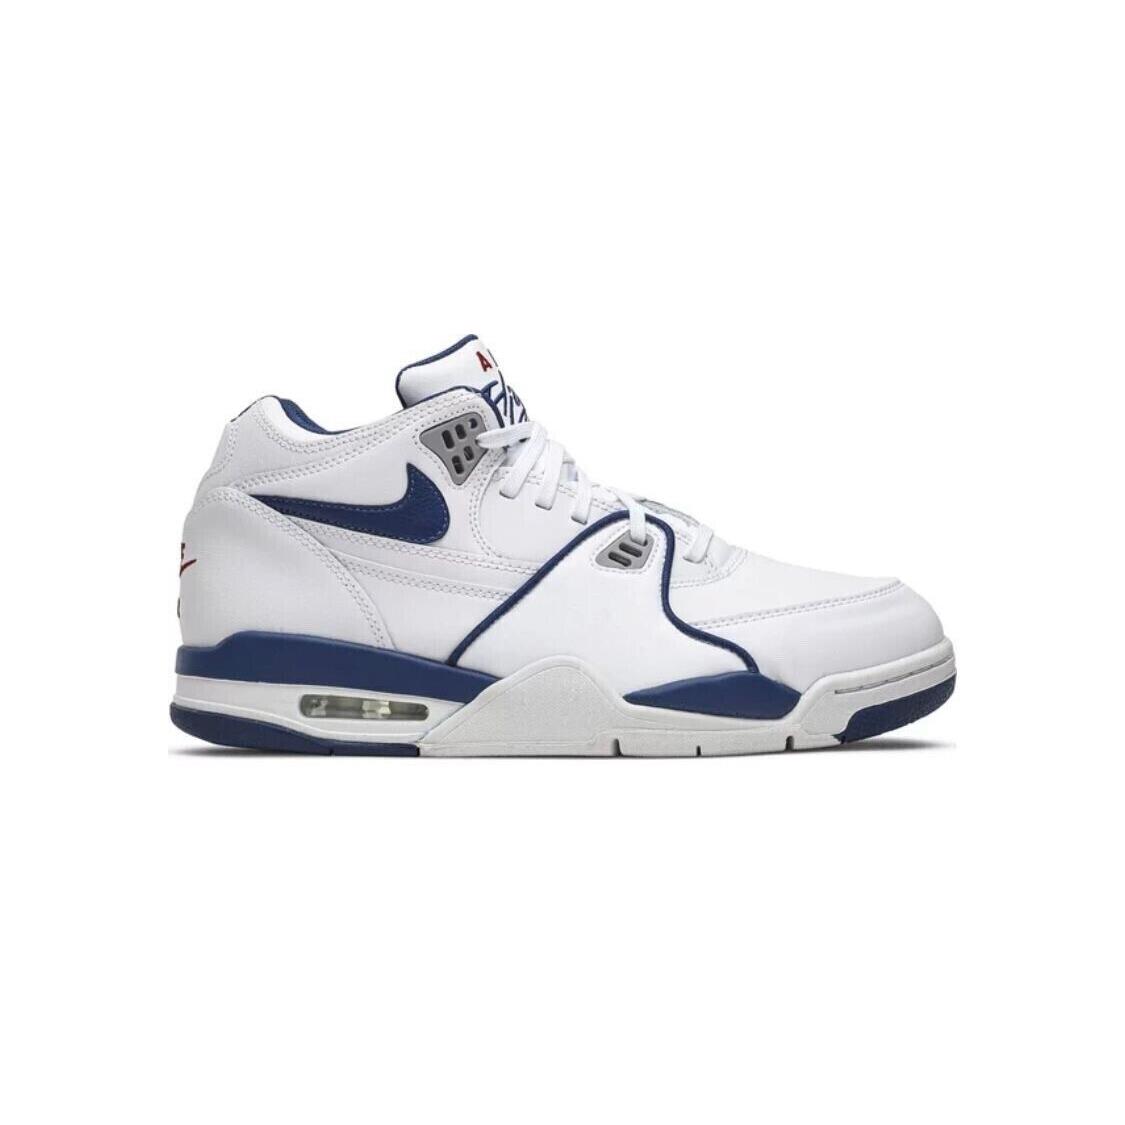 Nike Air Flight 89 Mens Basketball Shoes Box NO Lid CN5668 101 - WHITE/DARK ROYAL BLUE